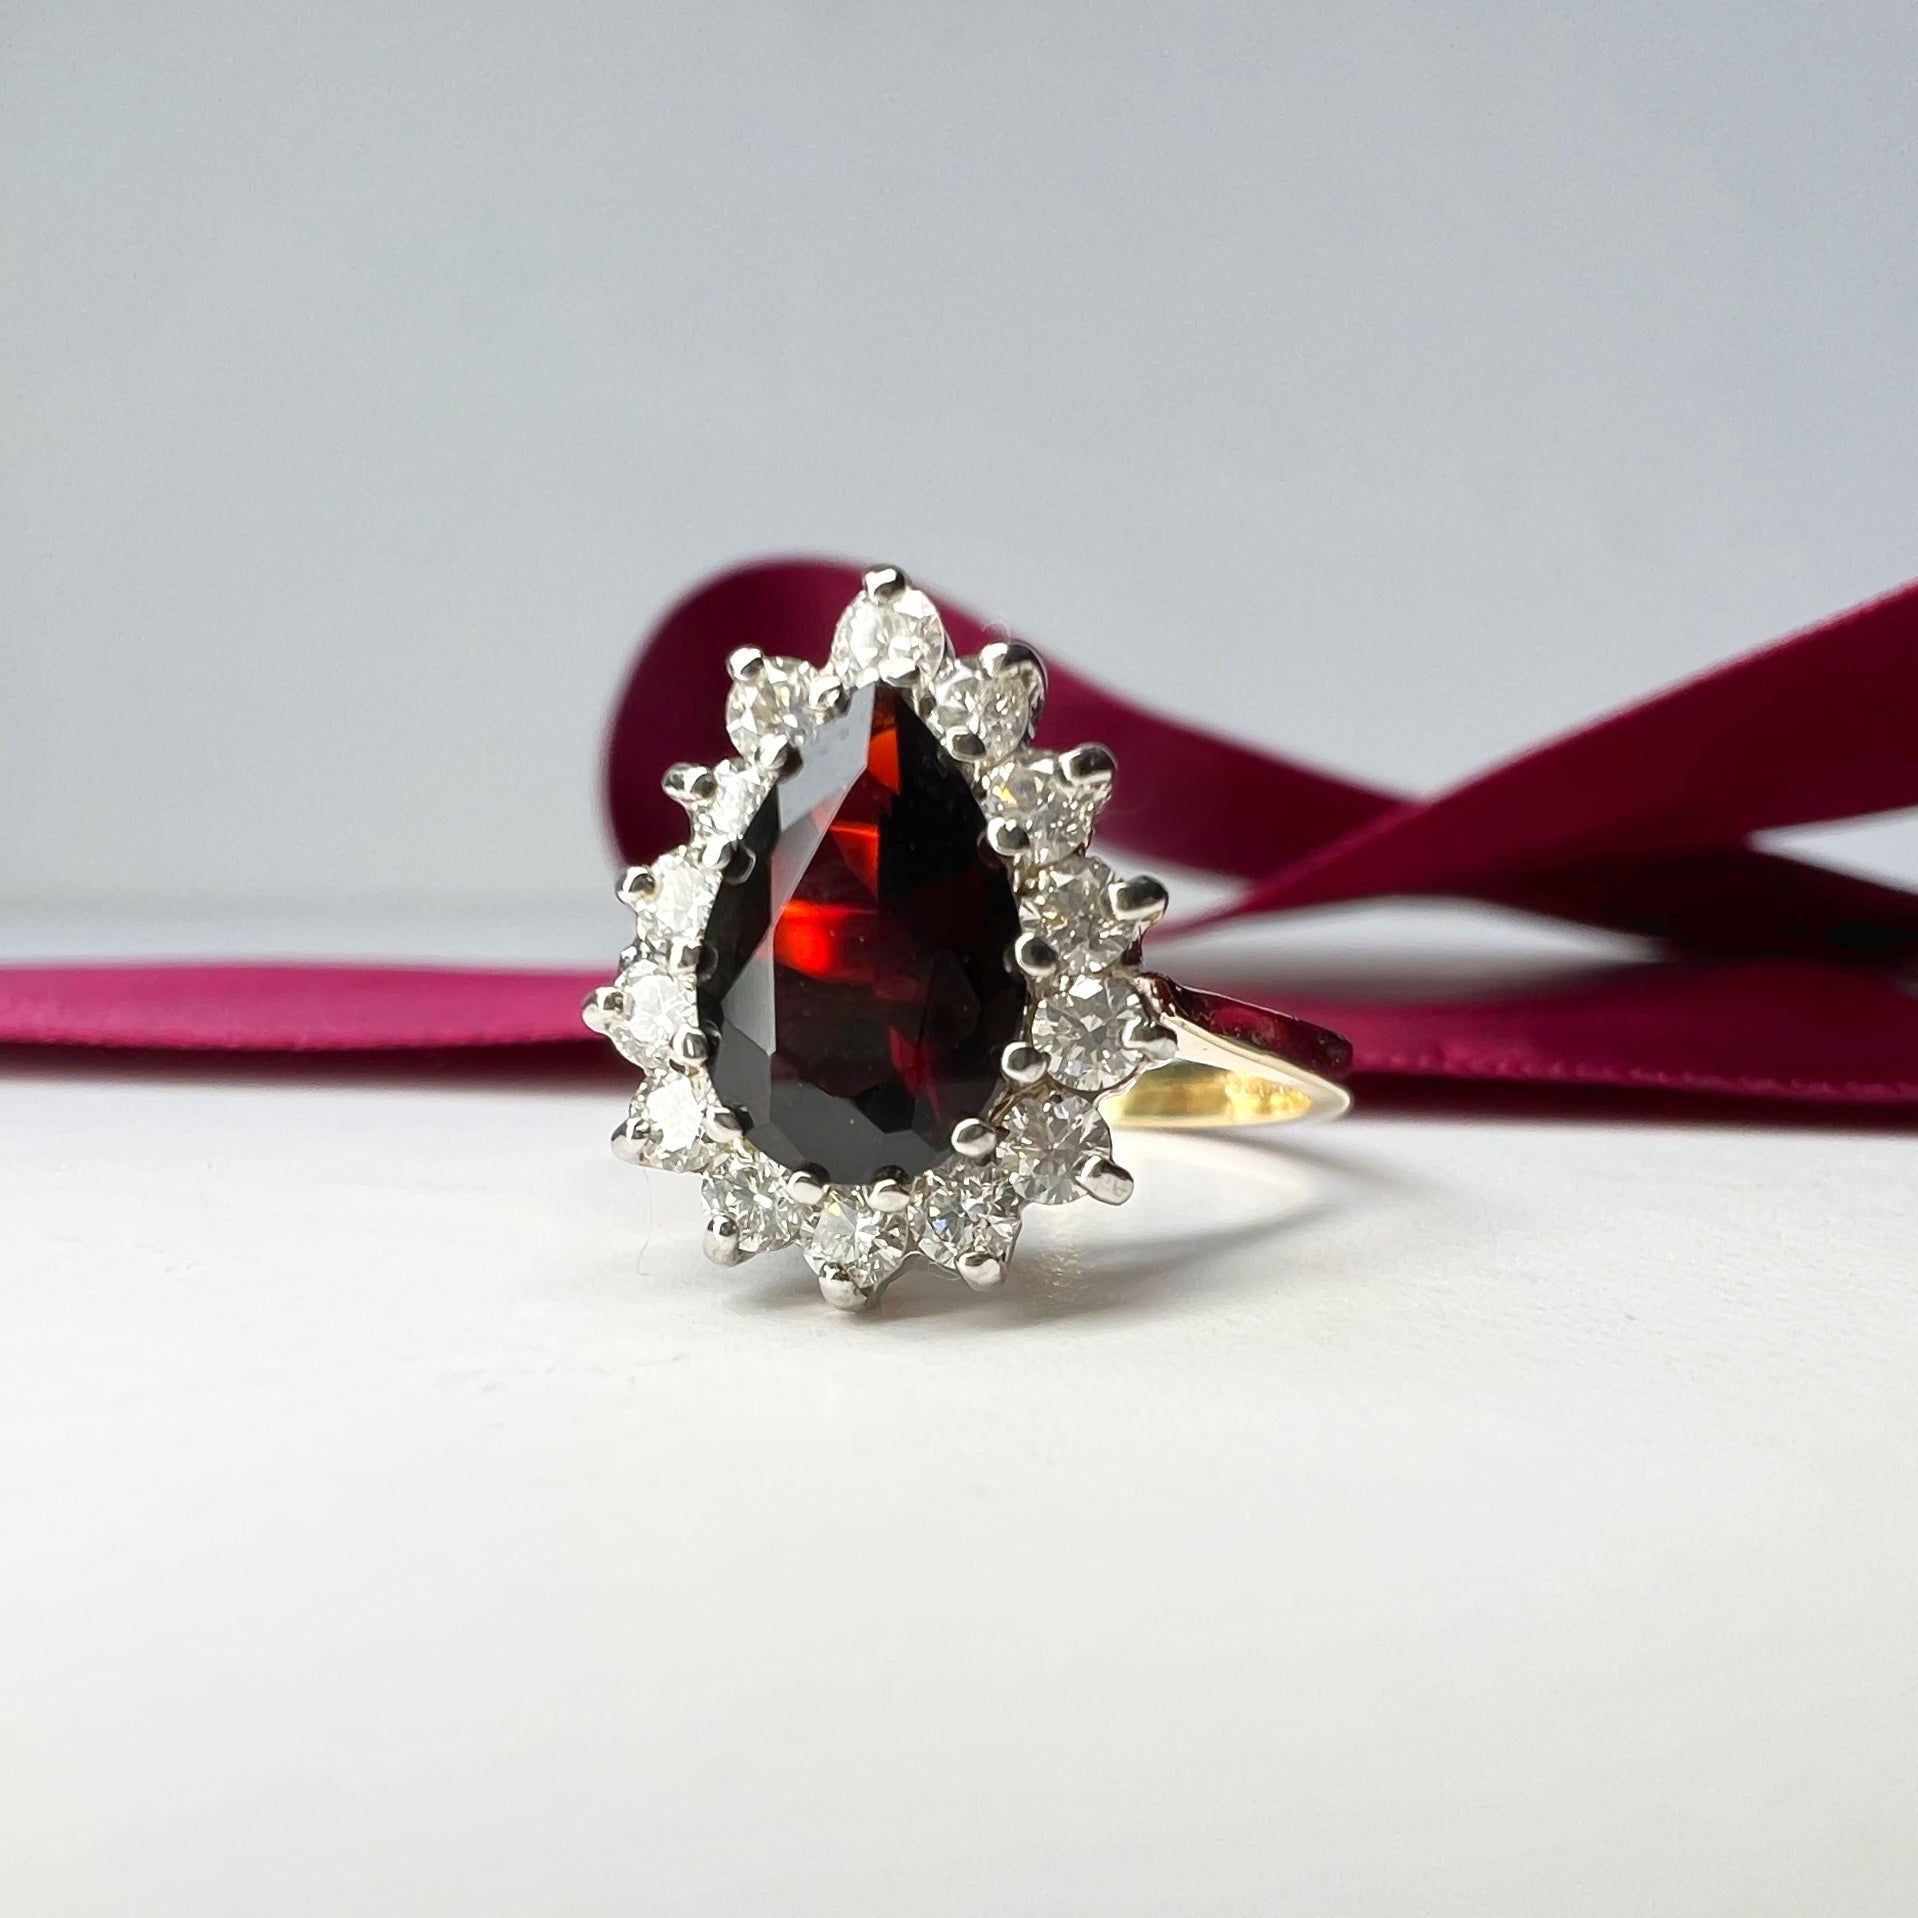 Garnet and Diamond Pear Shaped Ring